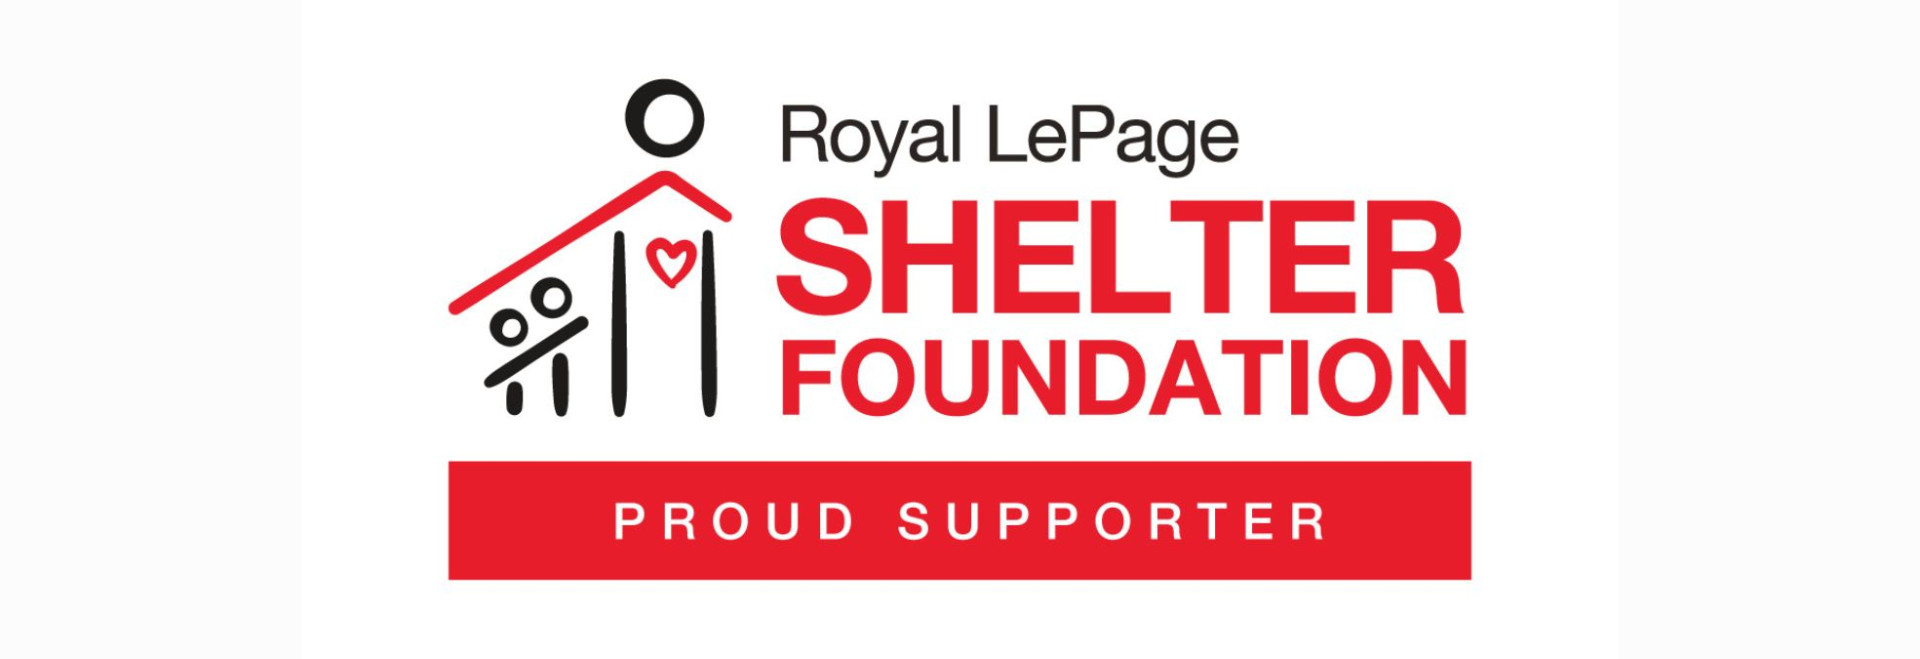 Royal LePage Shelter Foundation Donor